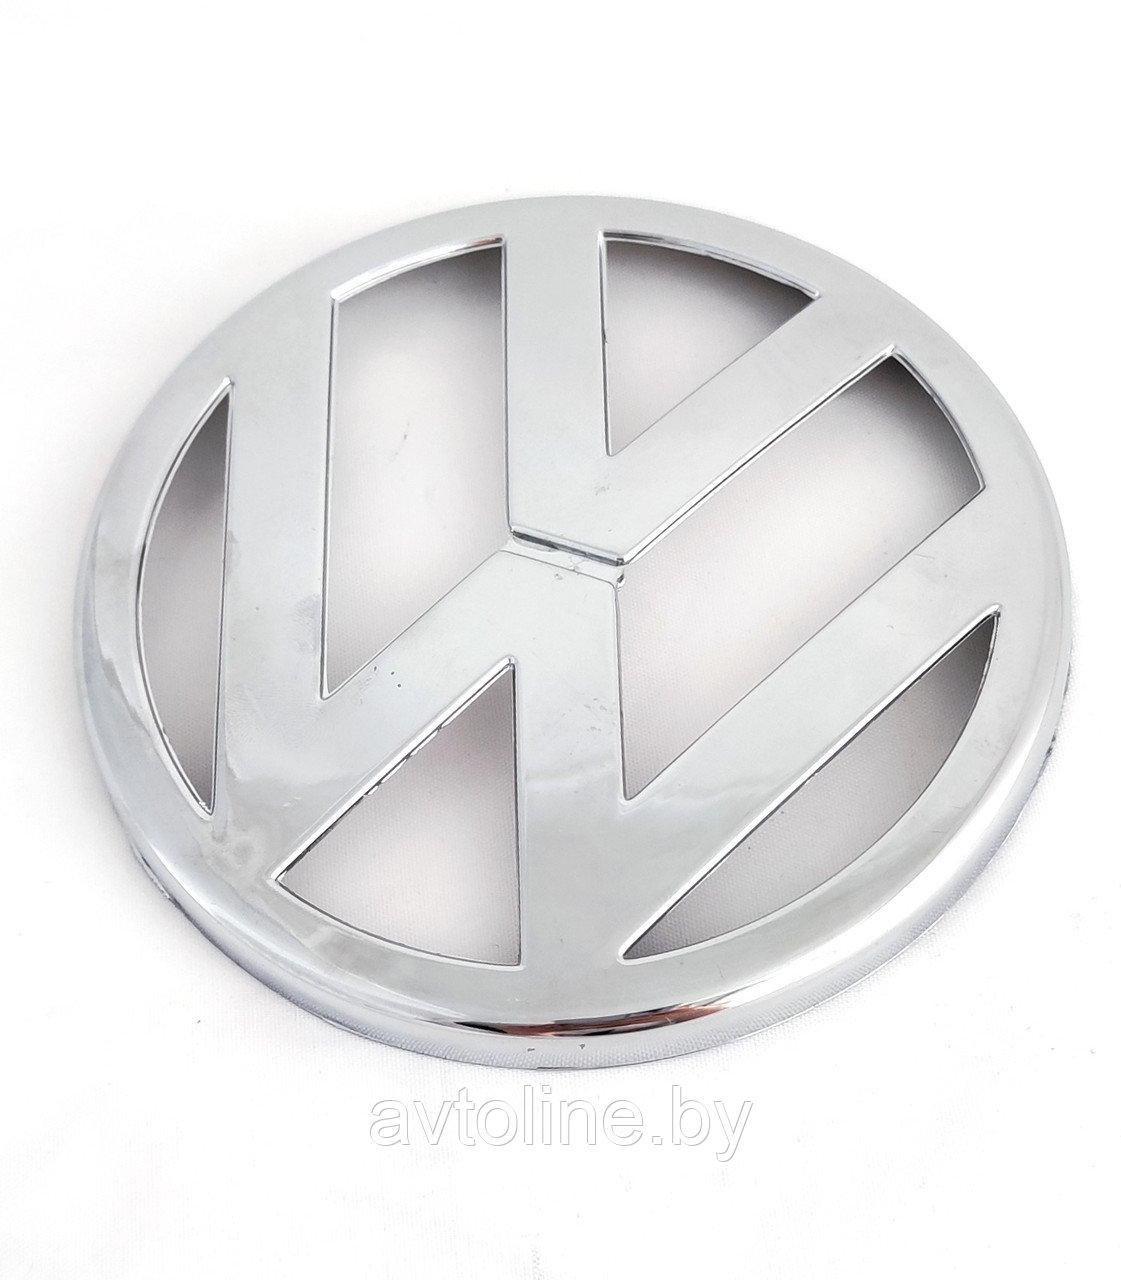 Эмблема Volkswagen Golf IV 115мм (копия) 1J0853601 (COPY)